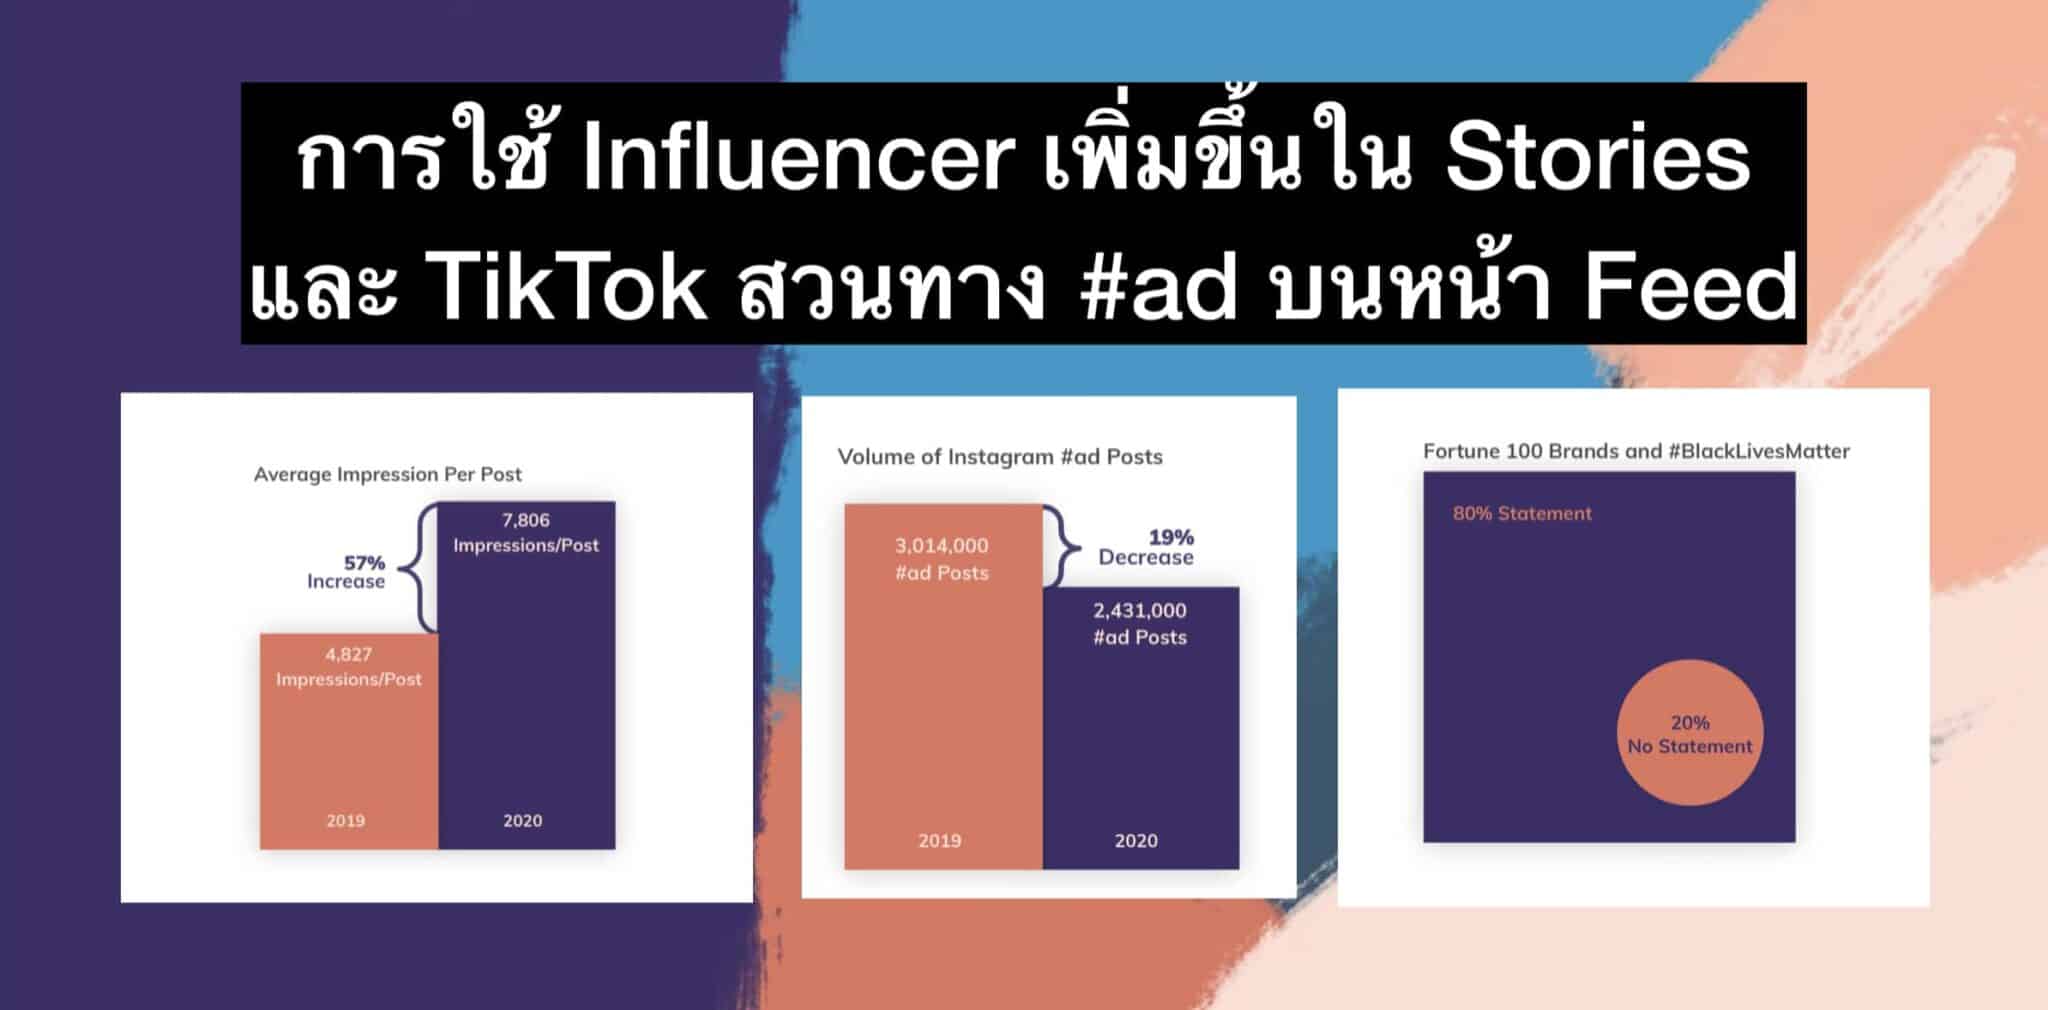 Influencer Marketing ได้ผลดีขึ้นในปี 2020 โดยเฉพาะใน IG Stories และ TikTok